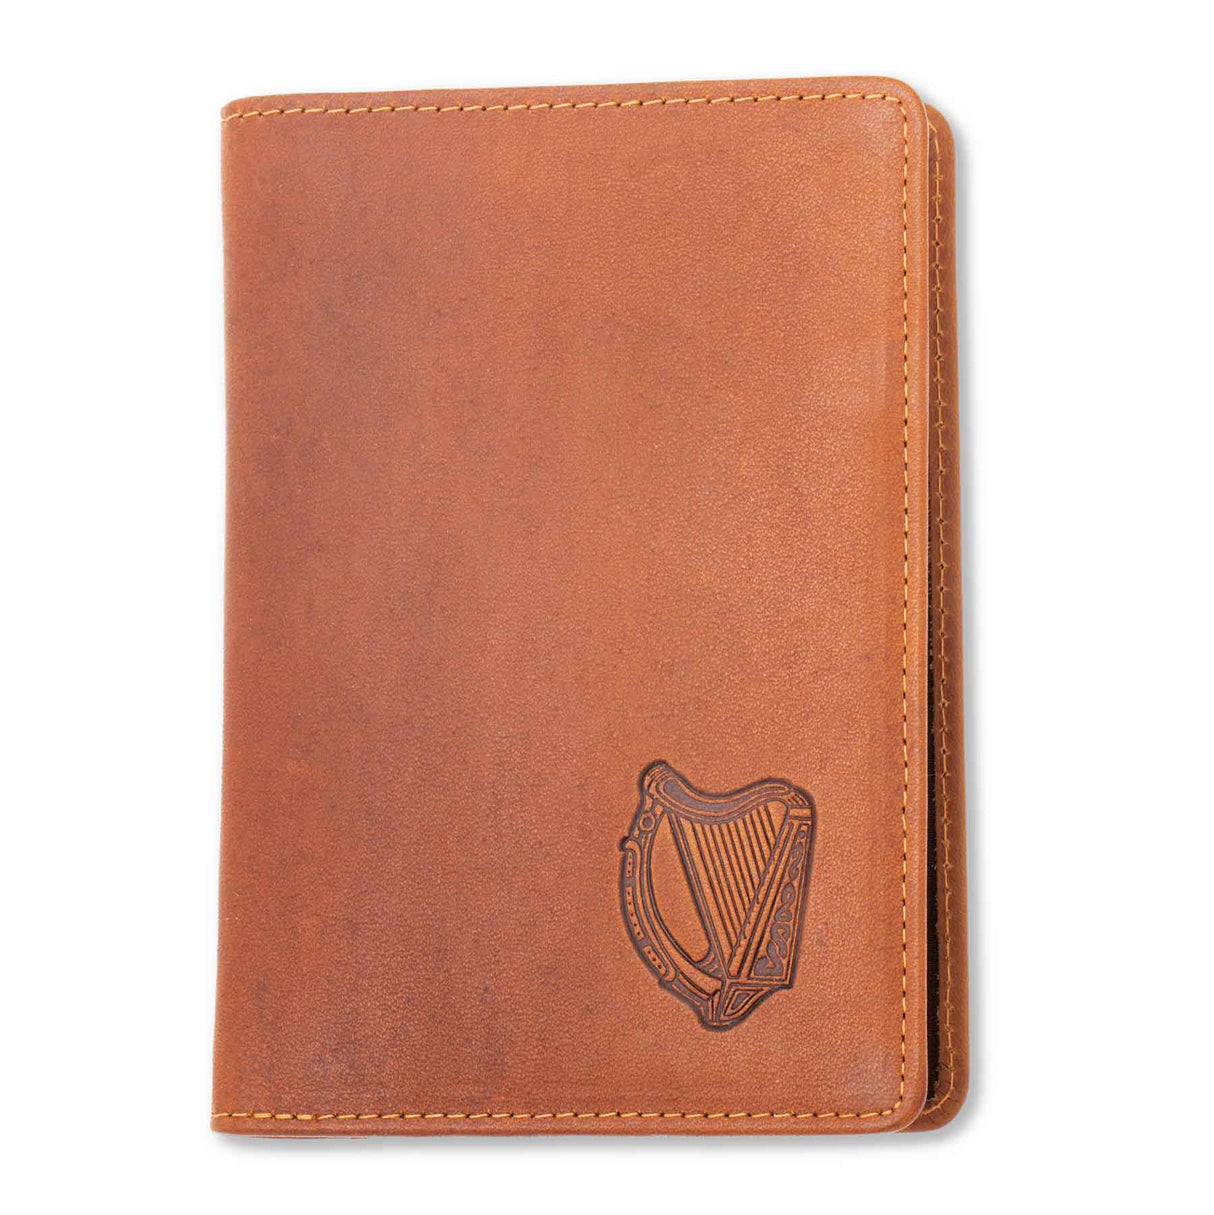 Leather Passport Cover - Creative Irish Gifts